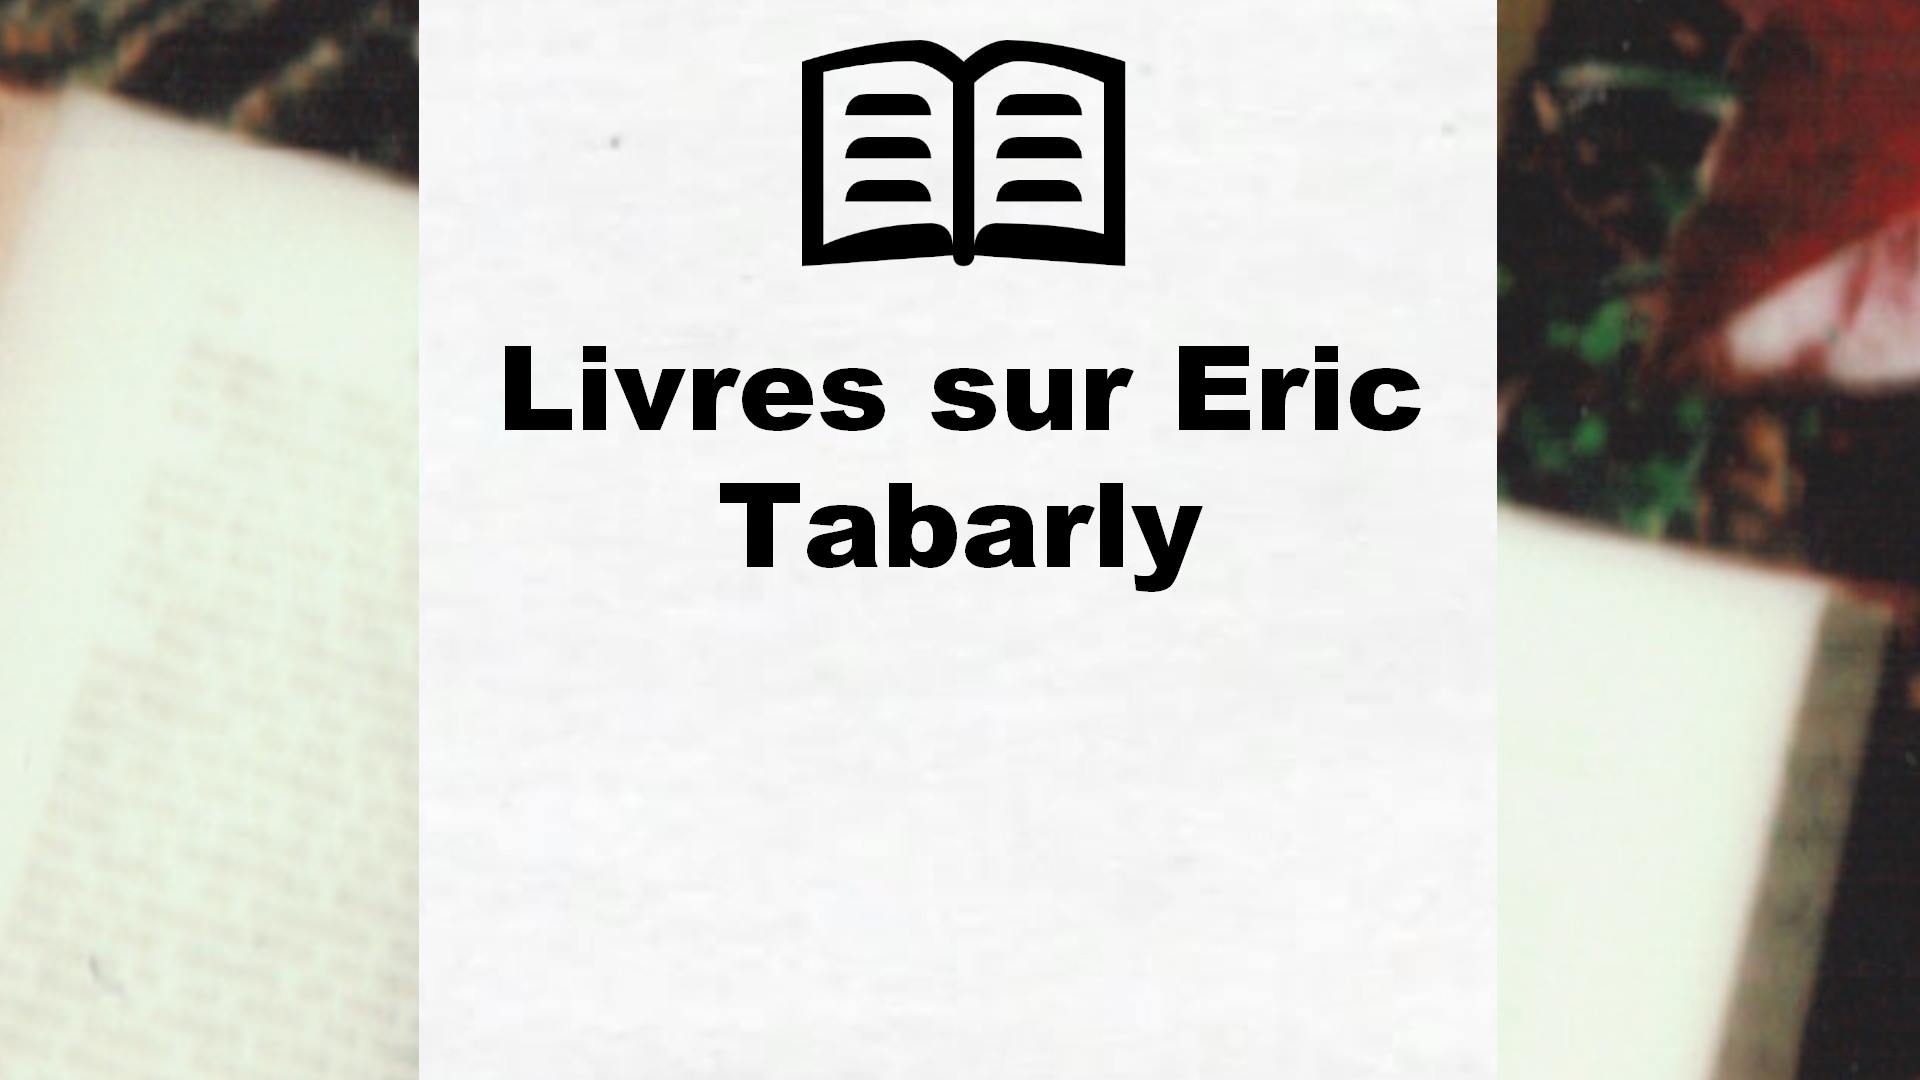 Livres sur Eric Tabarly